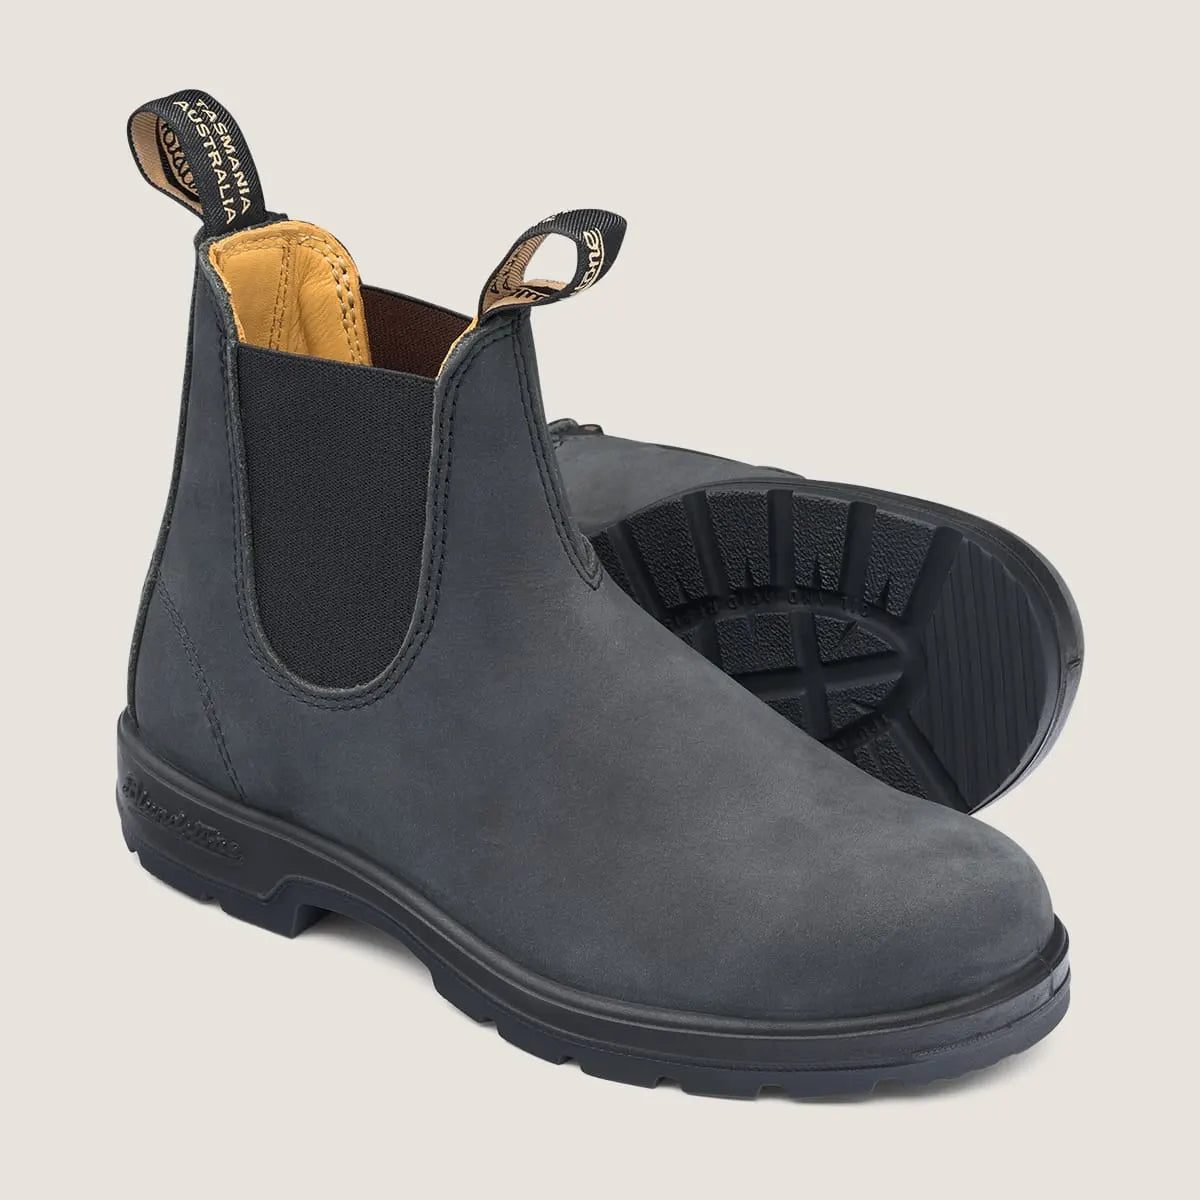 Blundstone 587 Urban Boots in Rustic Black